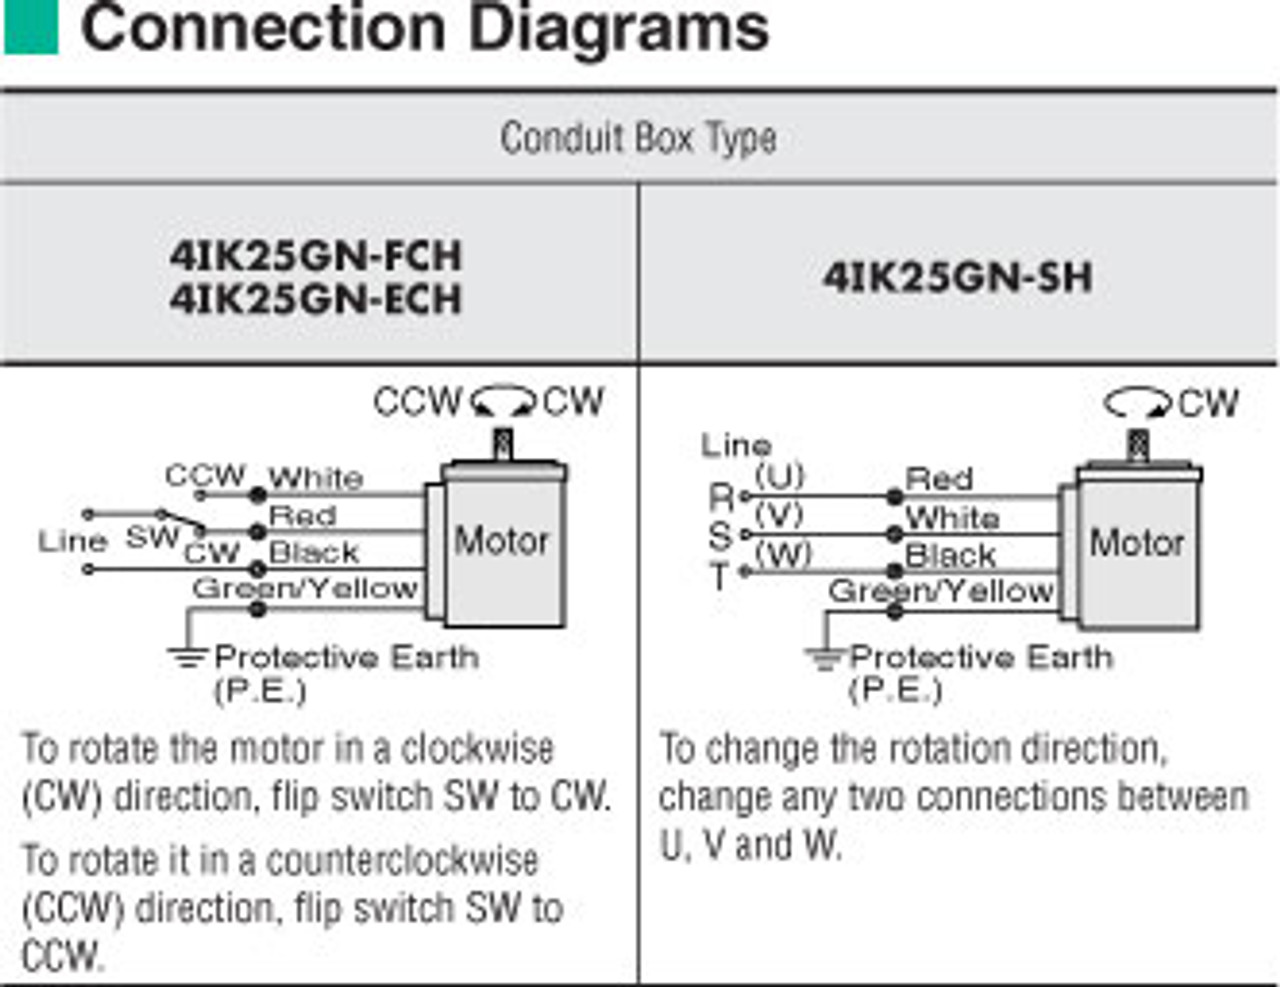 4IK25GN-SH / 4GN5SA - Connection